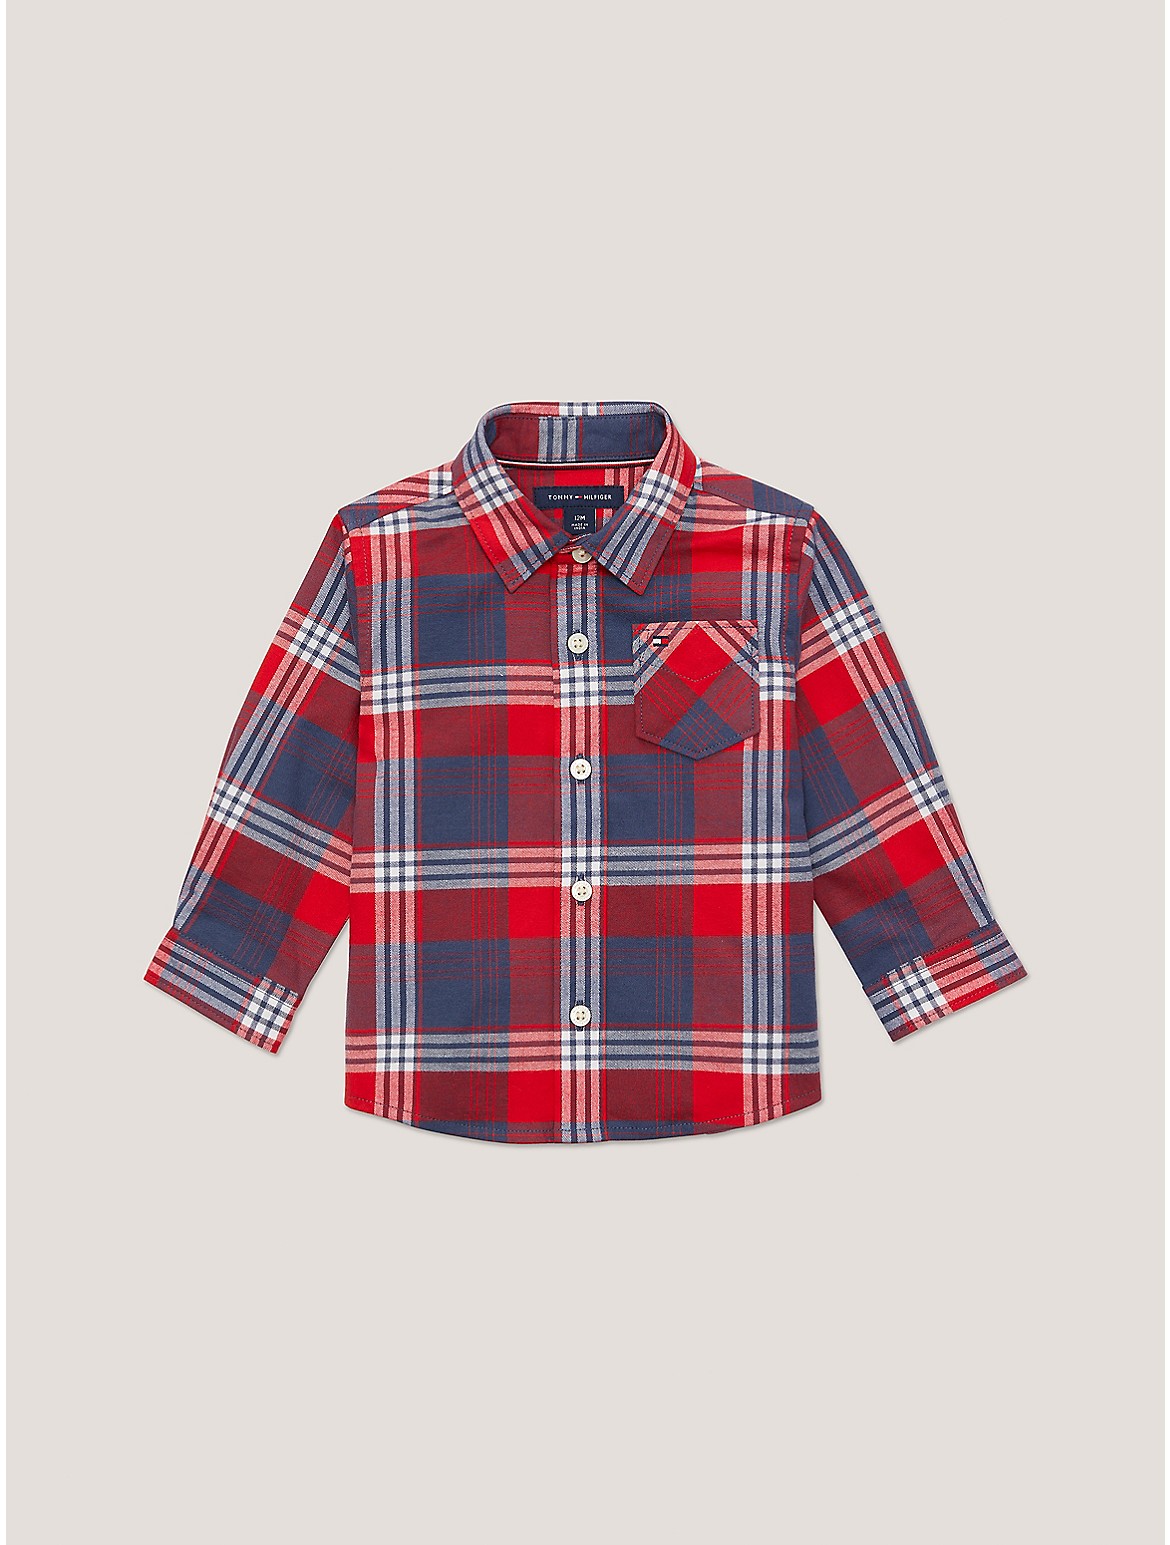 Tommy Hilfiger Boys' Babies' Plaid Shirt - Red - 18M